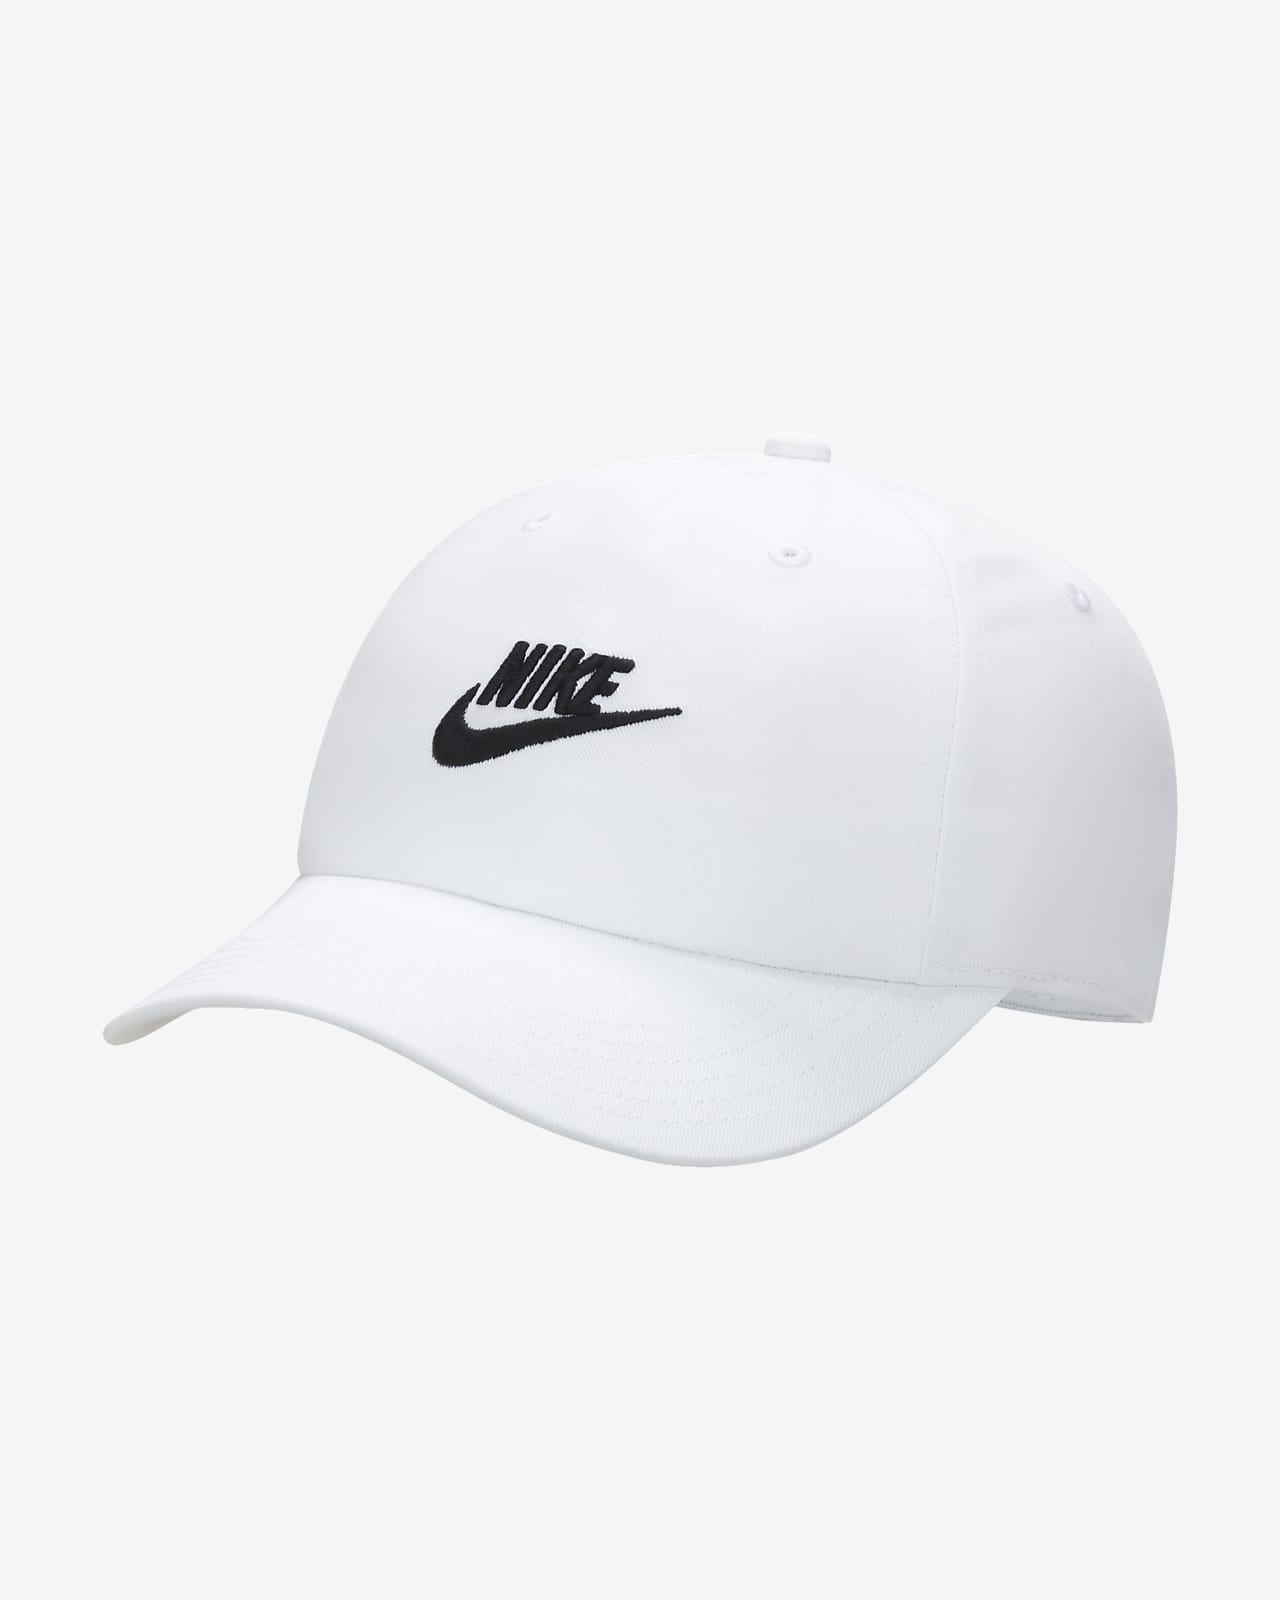 Nike Heritage 86 men's Women's black baseball Hat/ cap - one